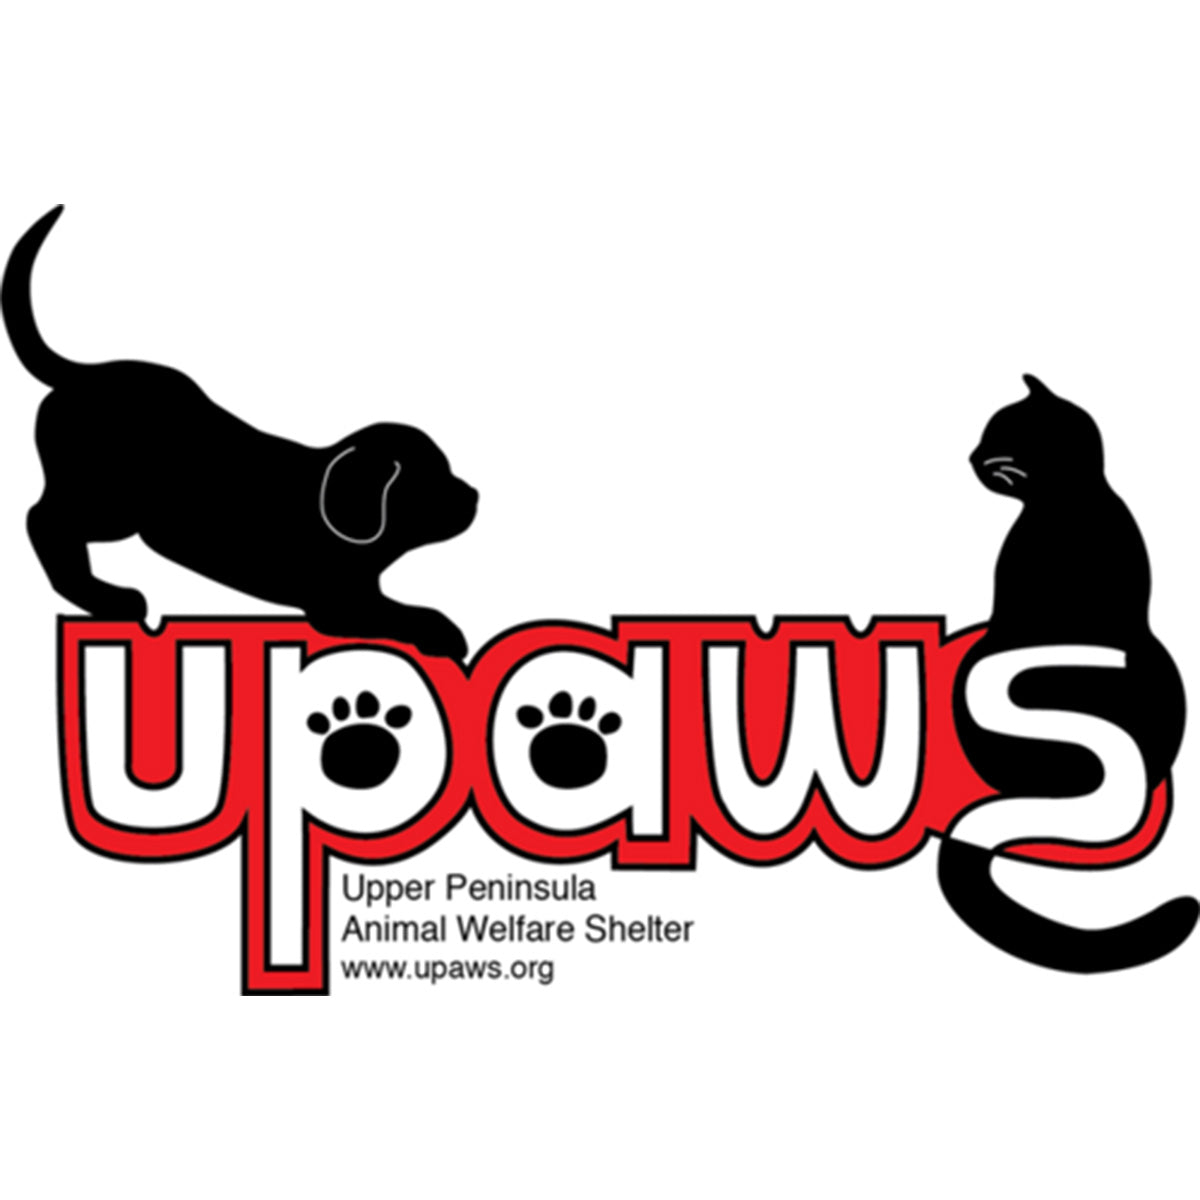 Upper Peninsula Animal Welfare Shelter